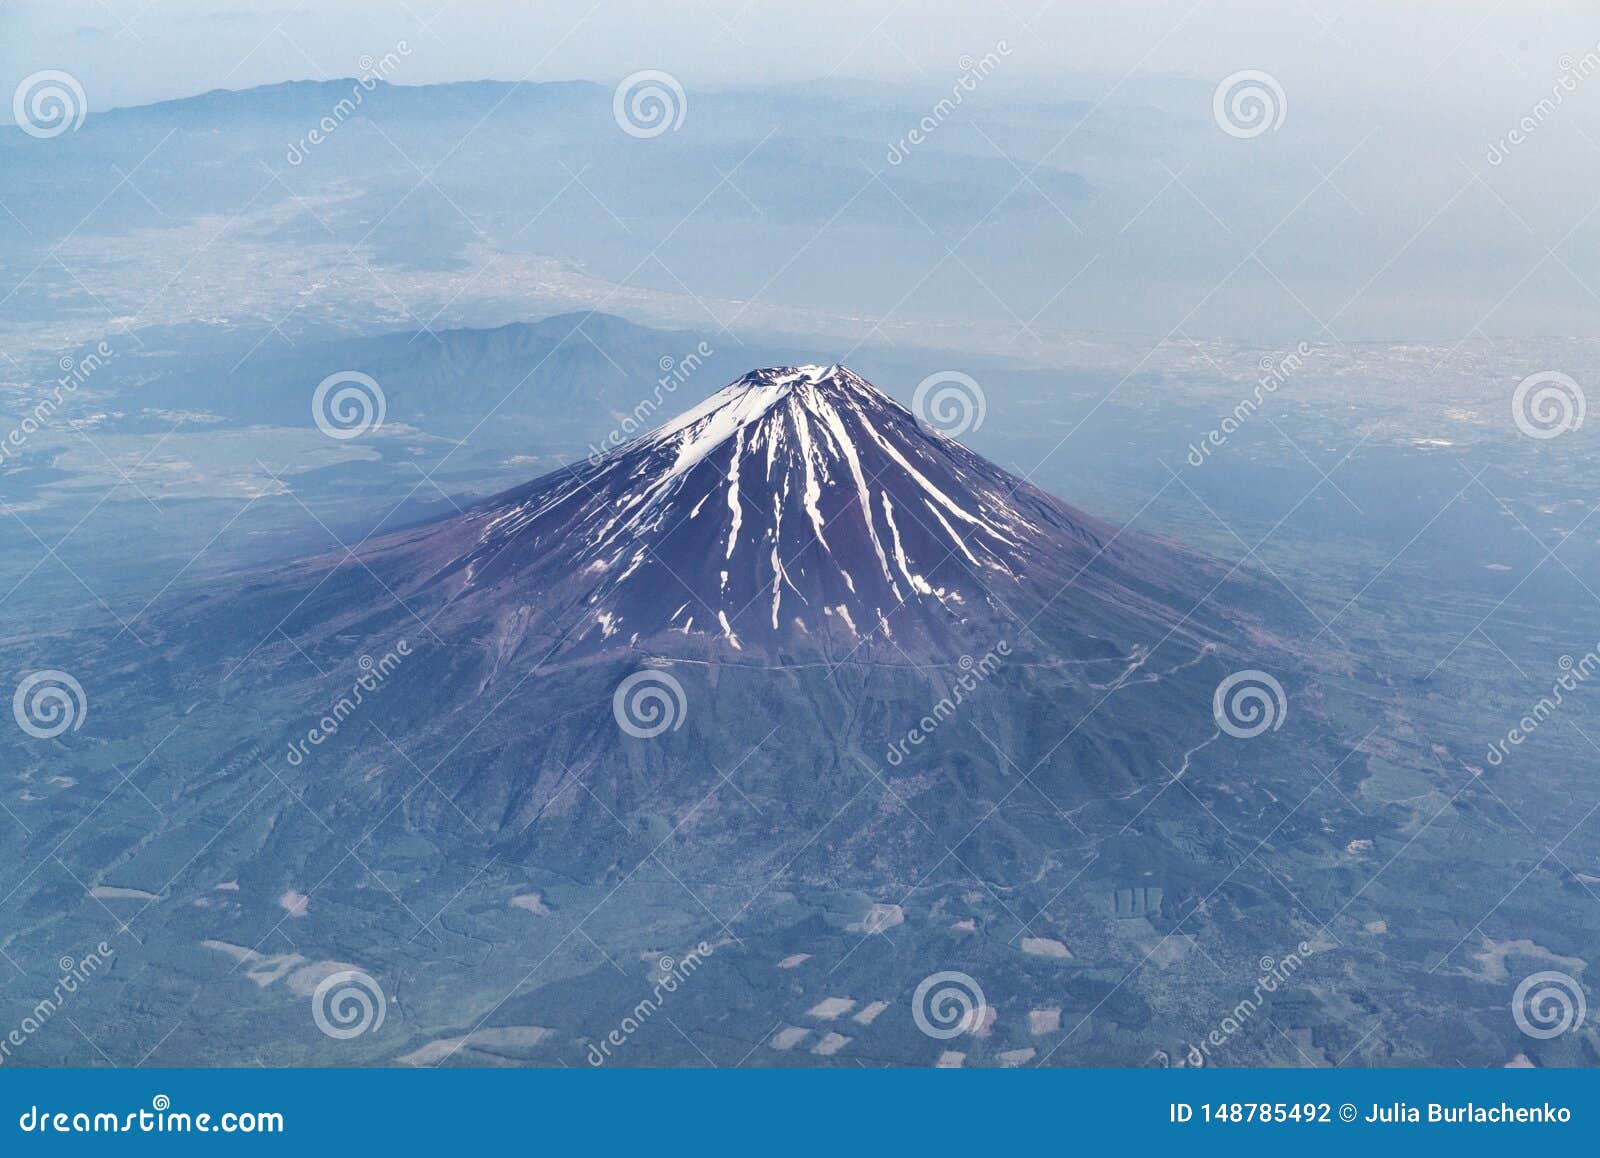 Aerial View on Fuji Mountain Stock Photo - Image of fuji, flight: 148785492